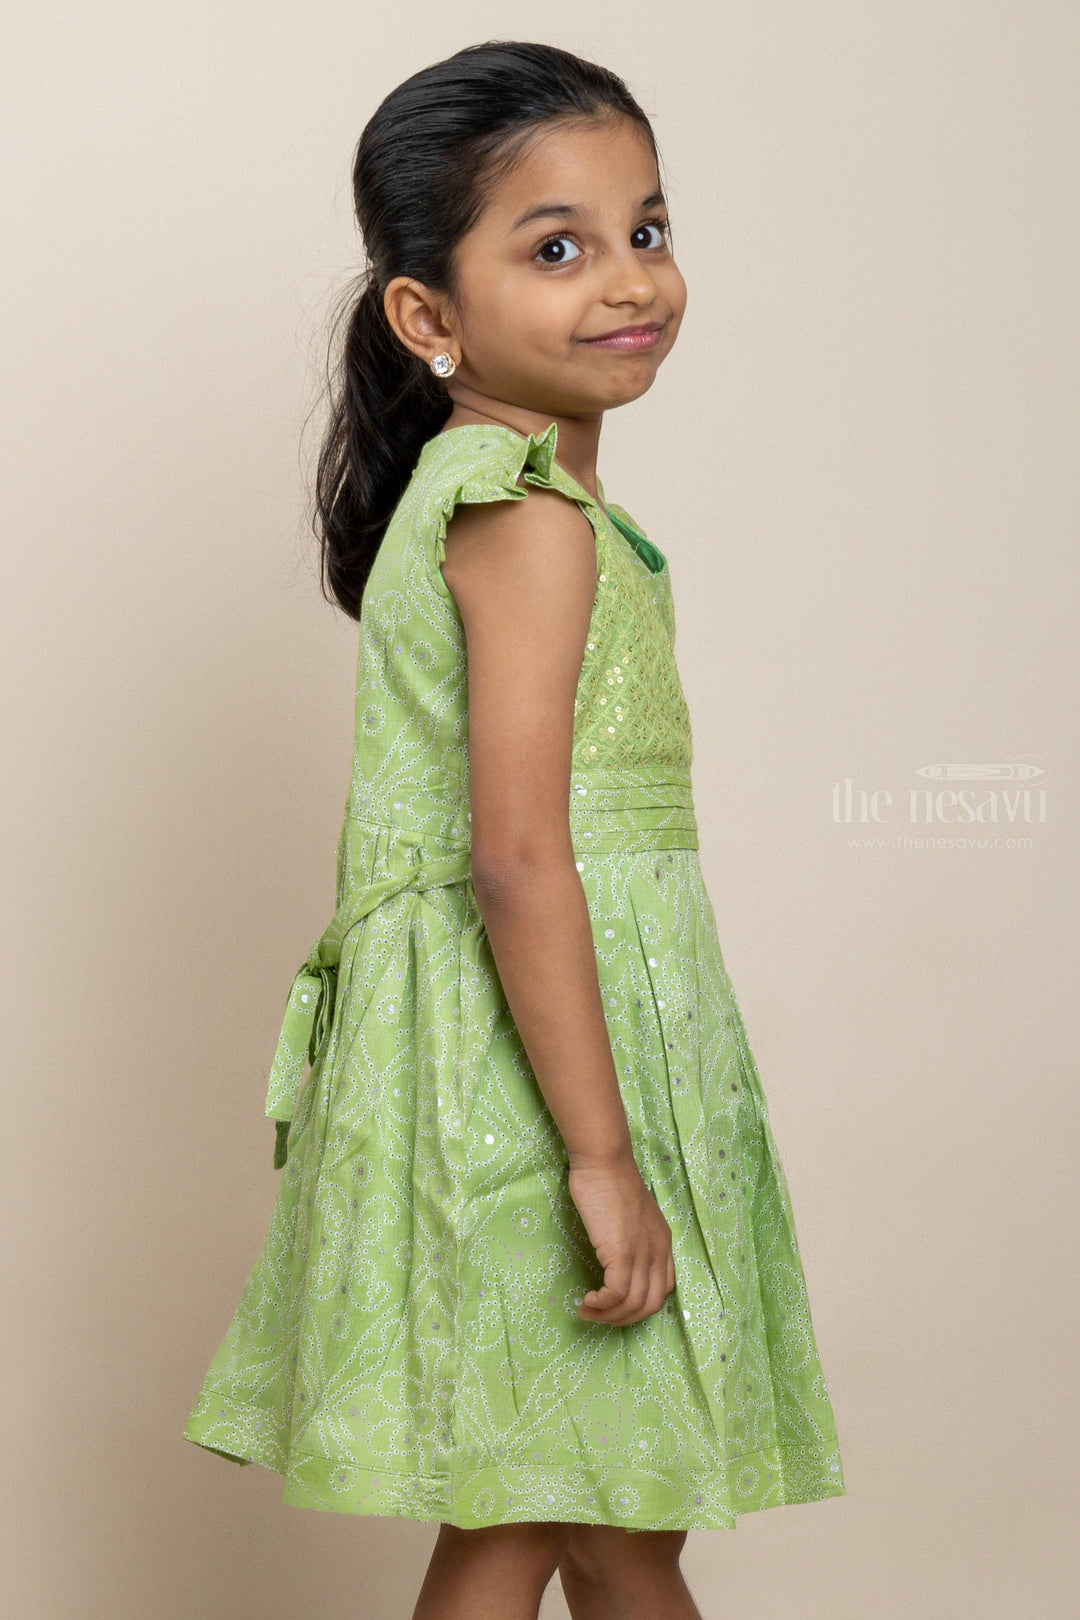 The Nesavu Frocks & Dresses Green Explosion - Cottony Cute Frocks With Bandhani Design Prints psr silks Nesavu